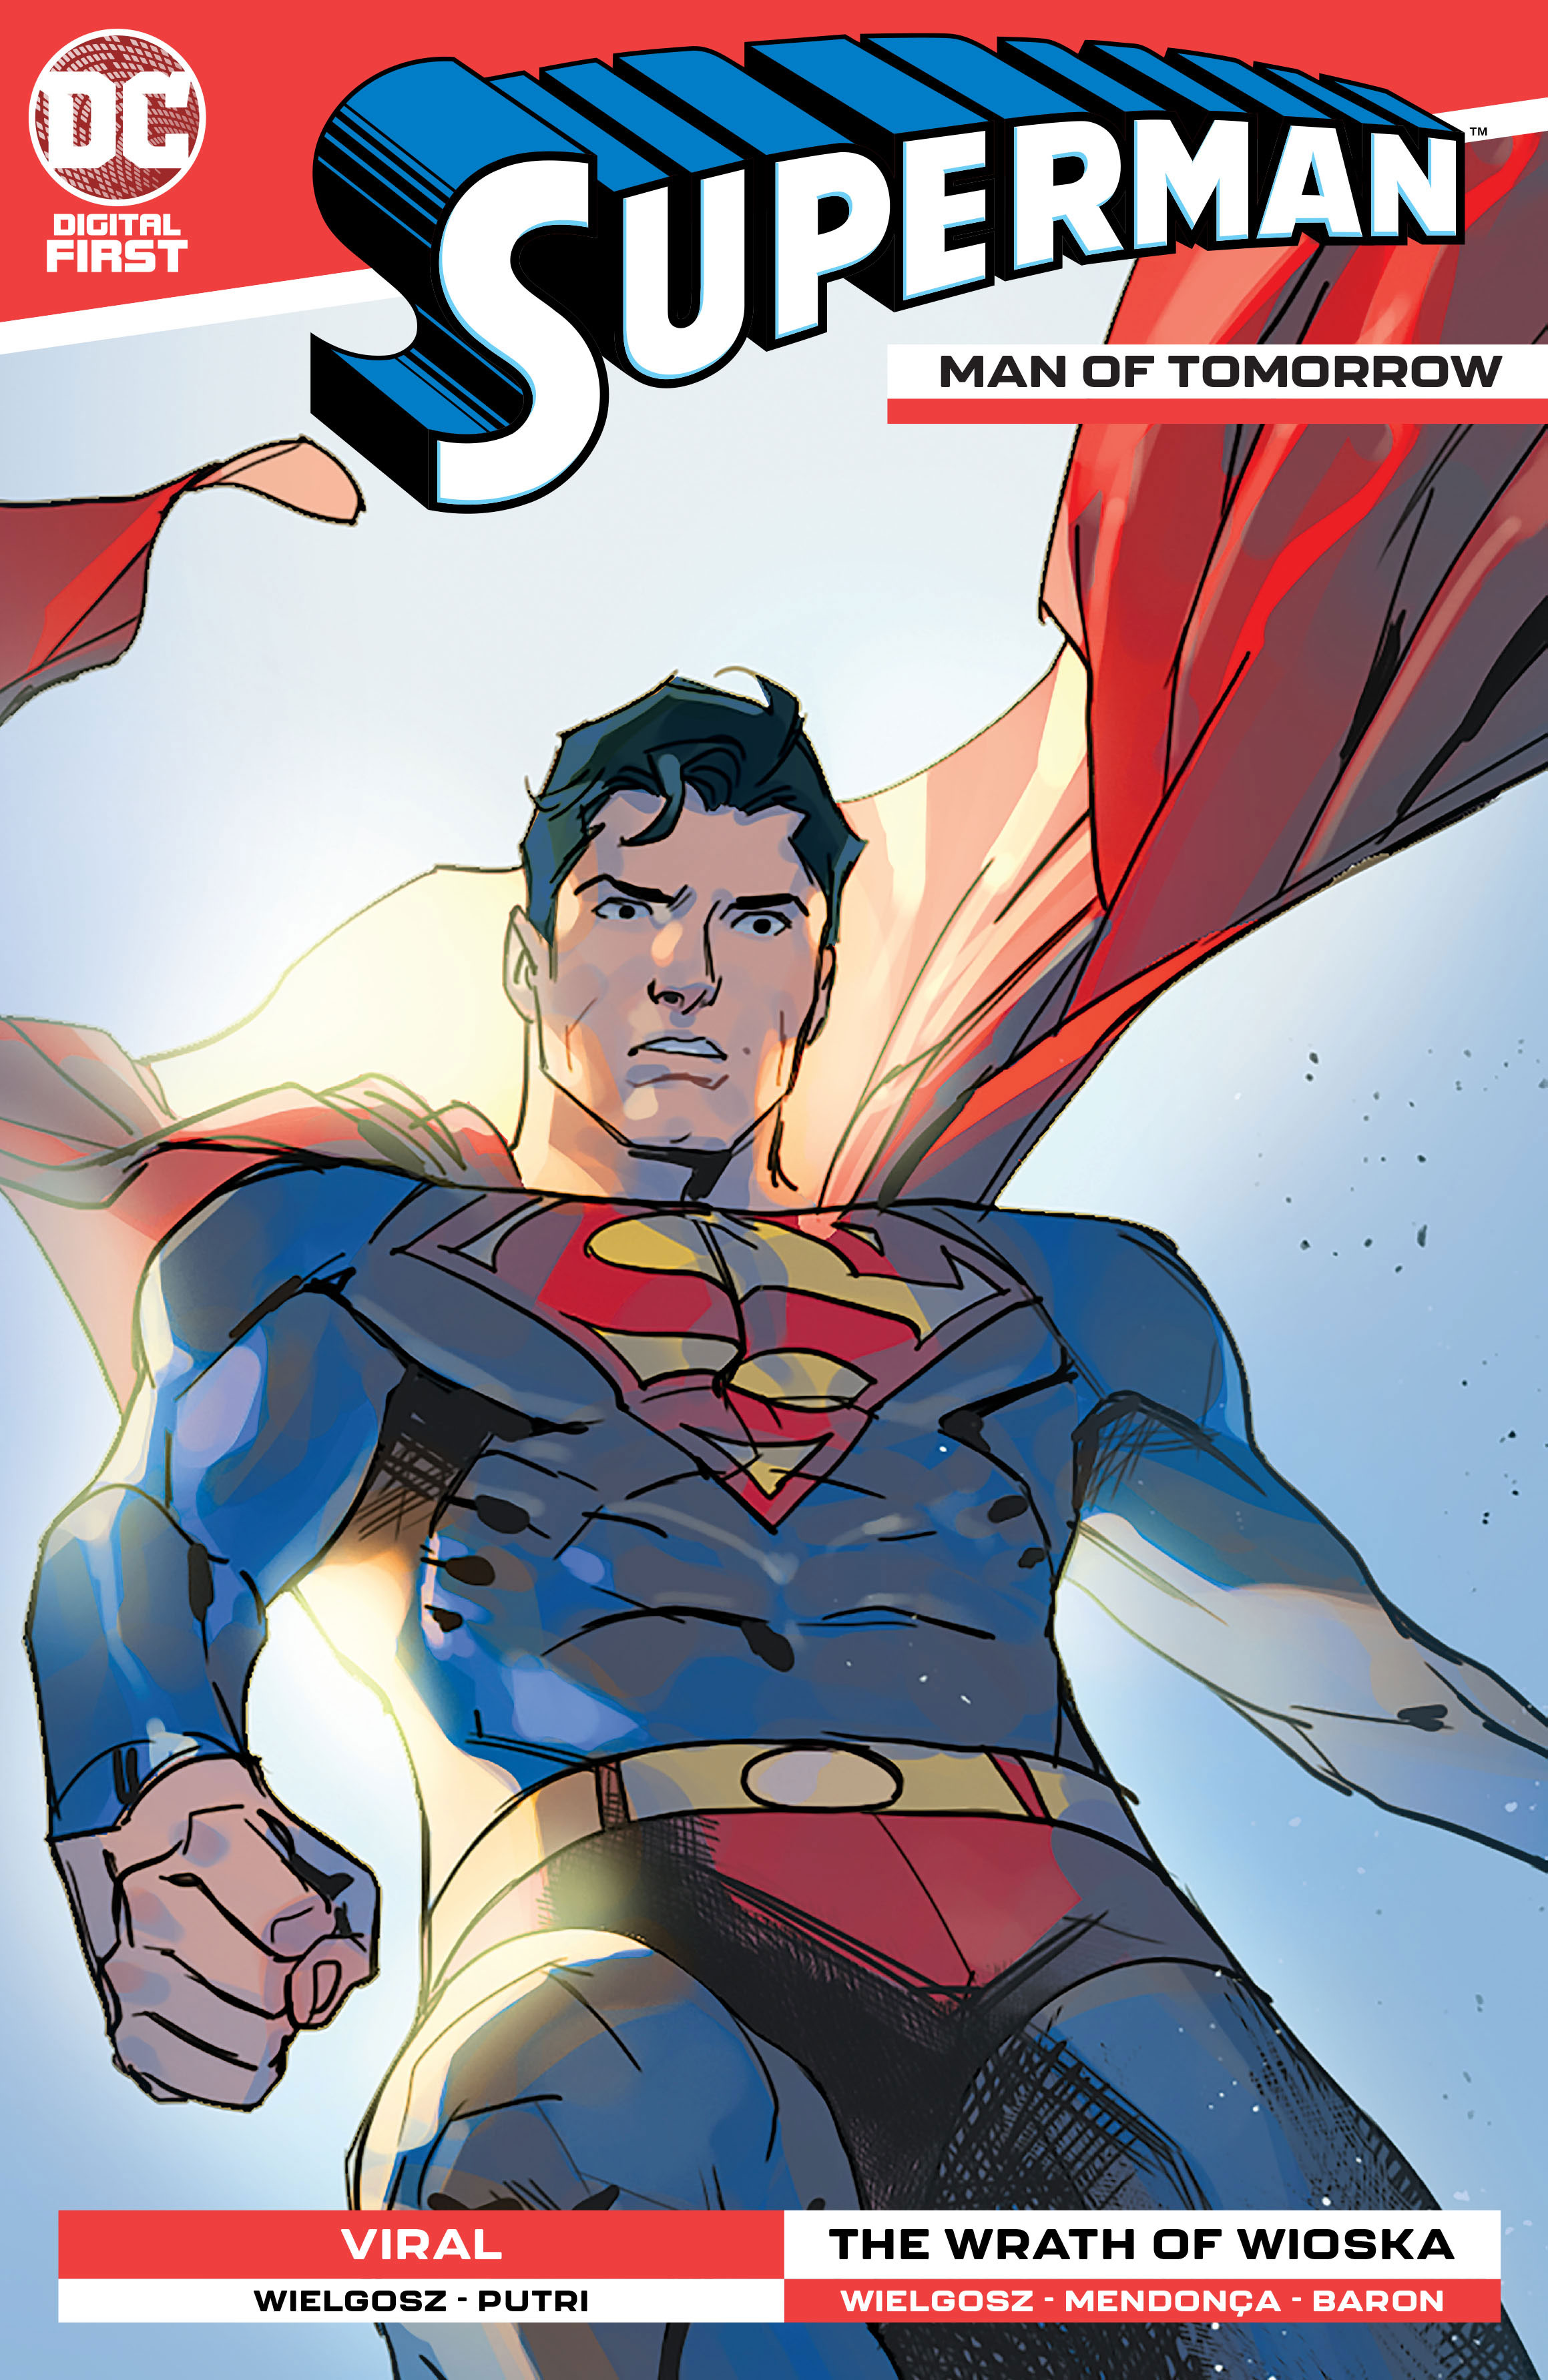 SUPERMAN-THE-MAN-OF-TOMORROW-Cv7